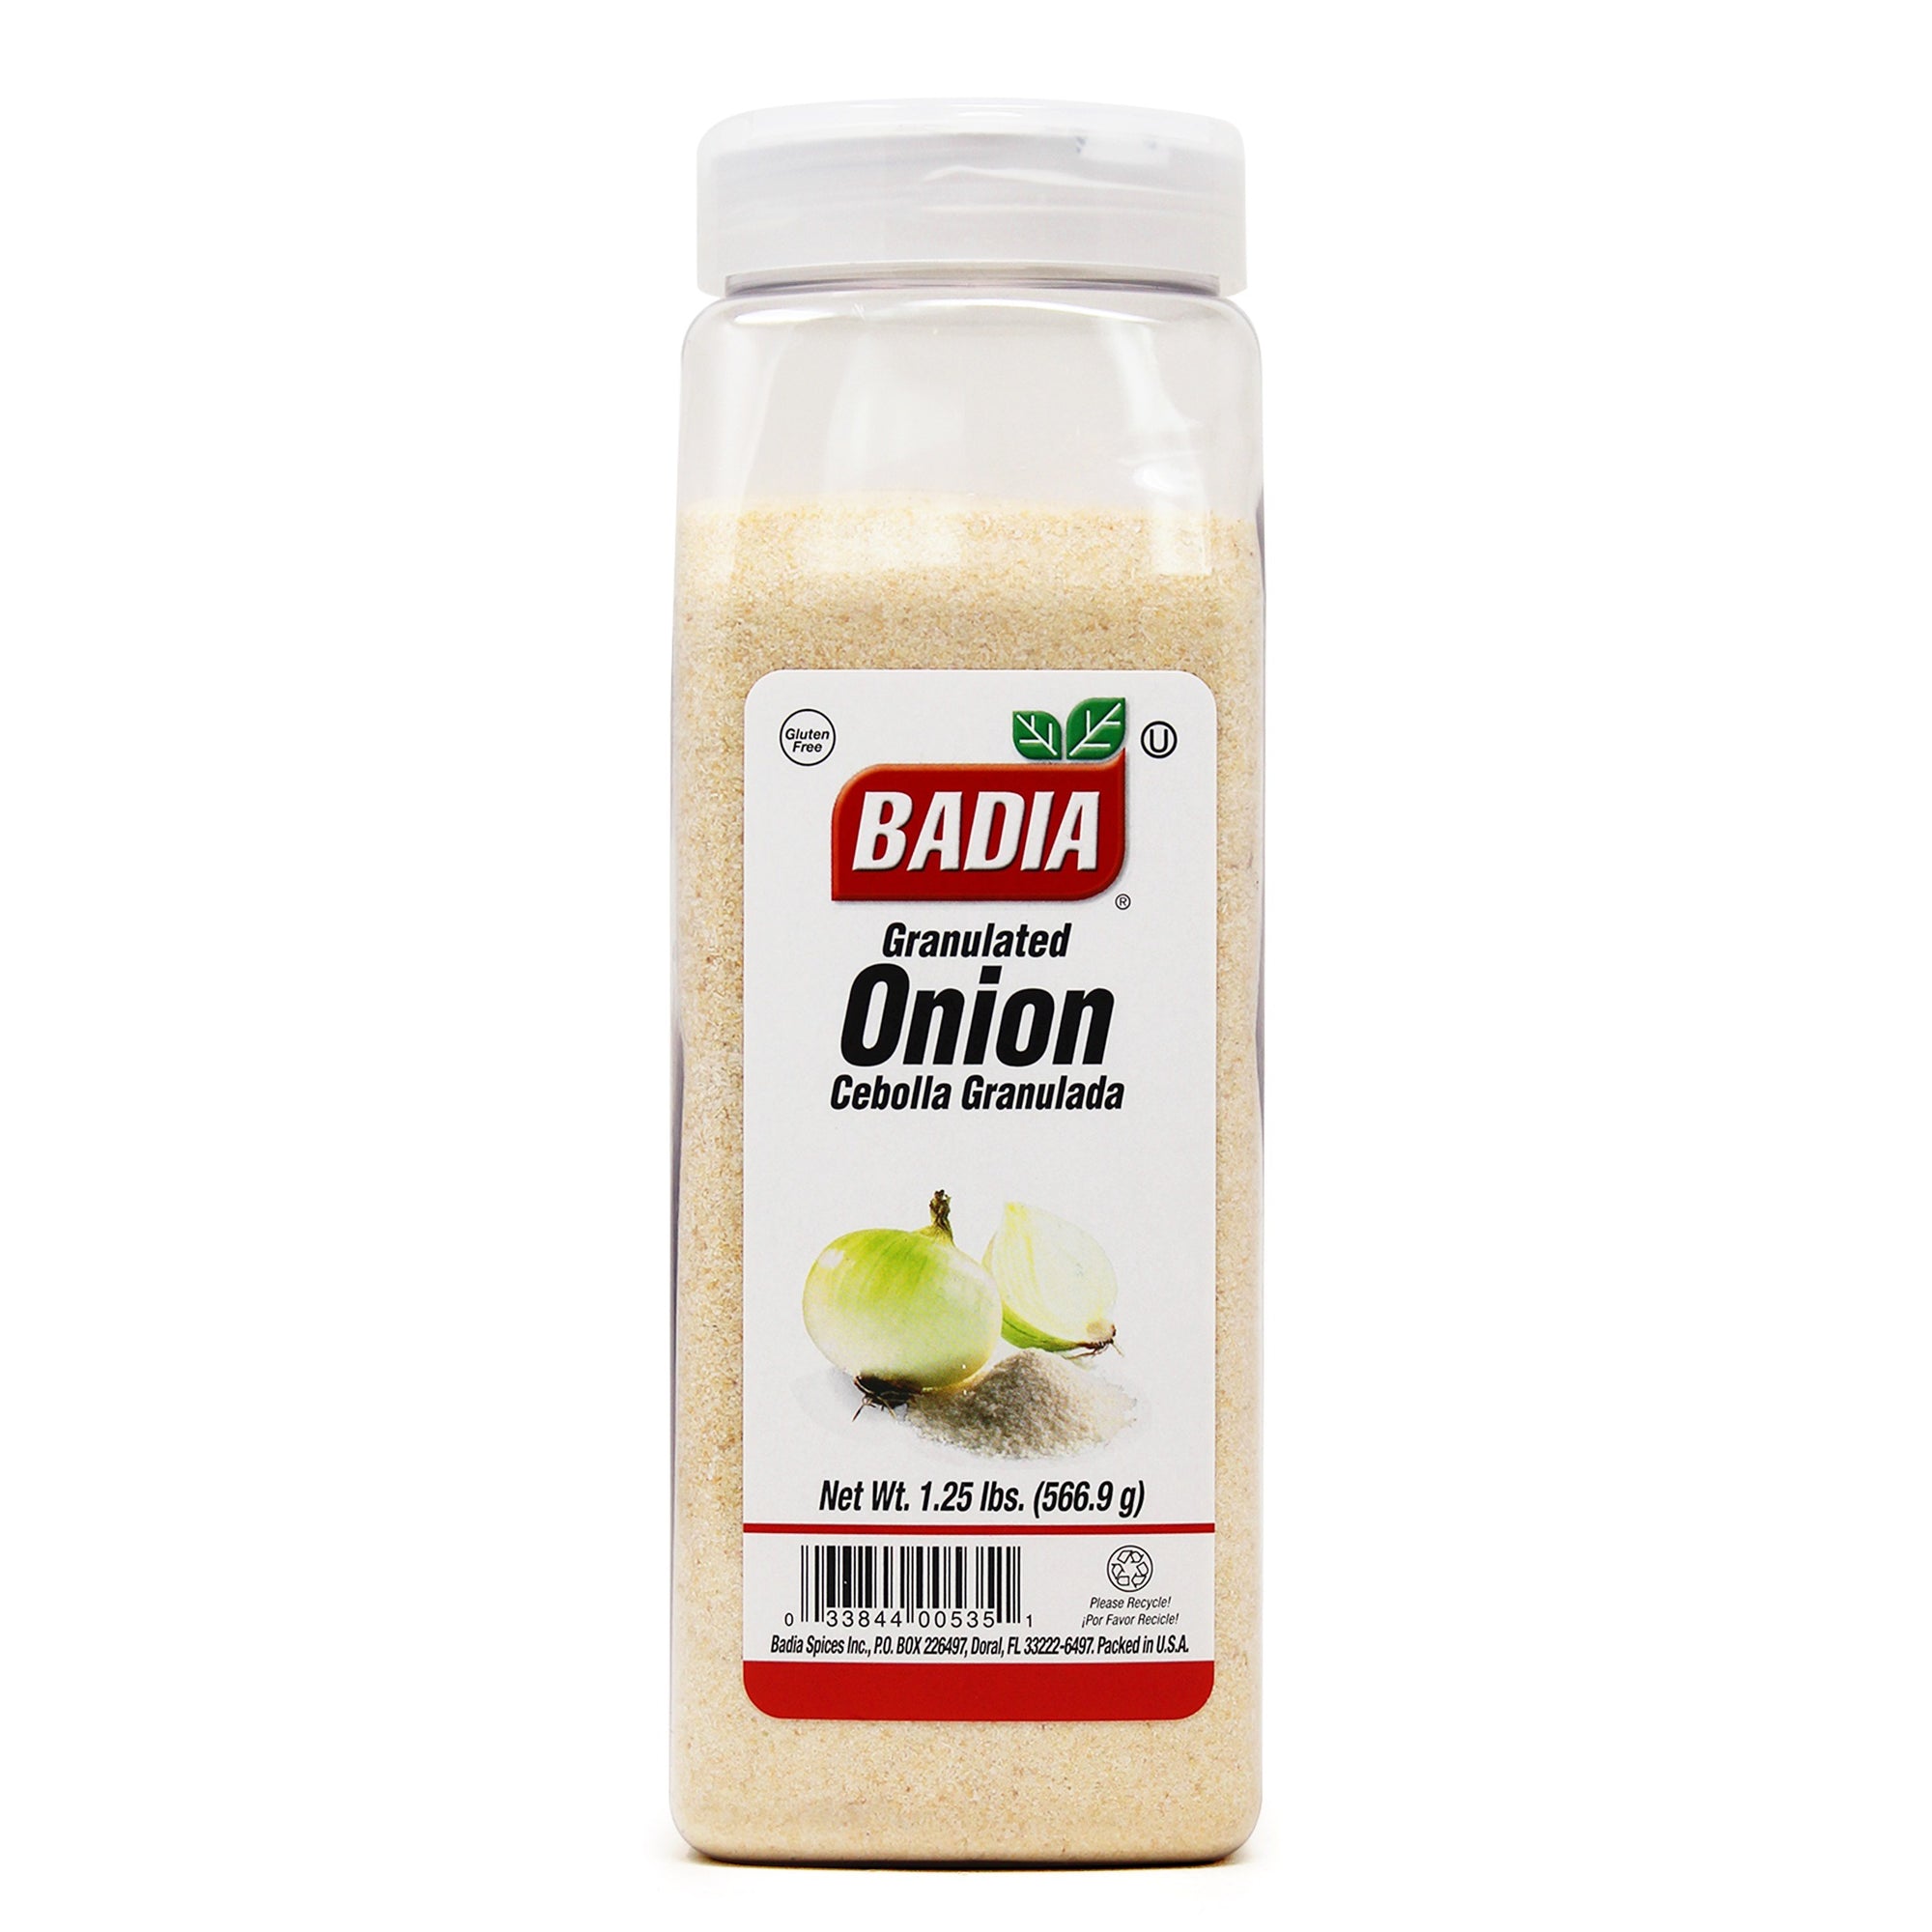 BADIA Granulated Onion 1.25 lbs